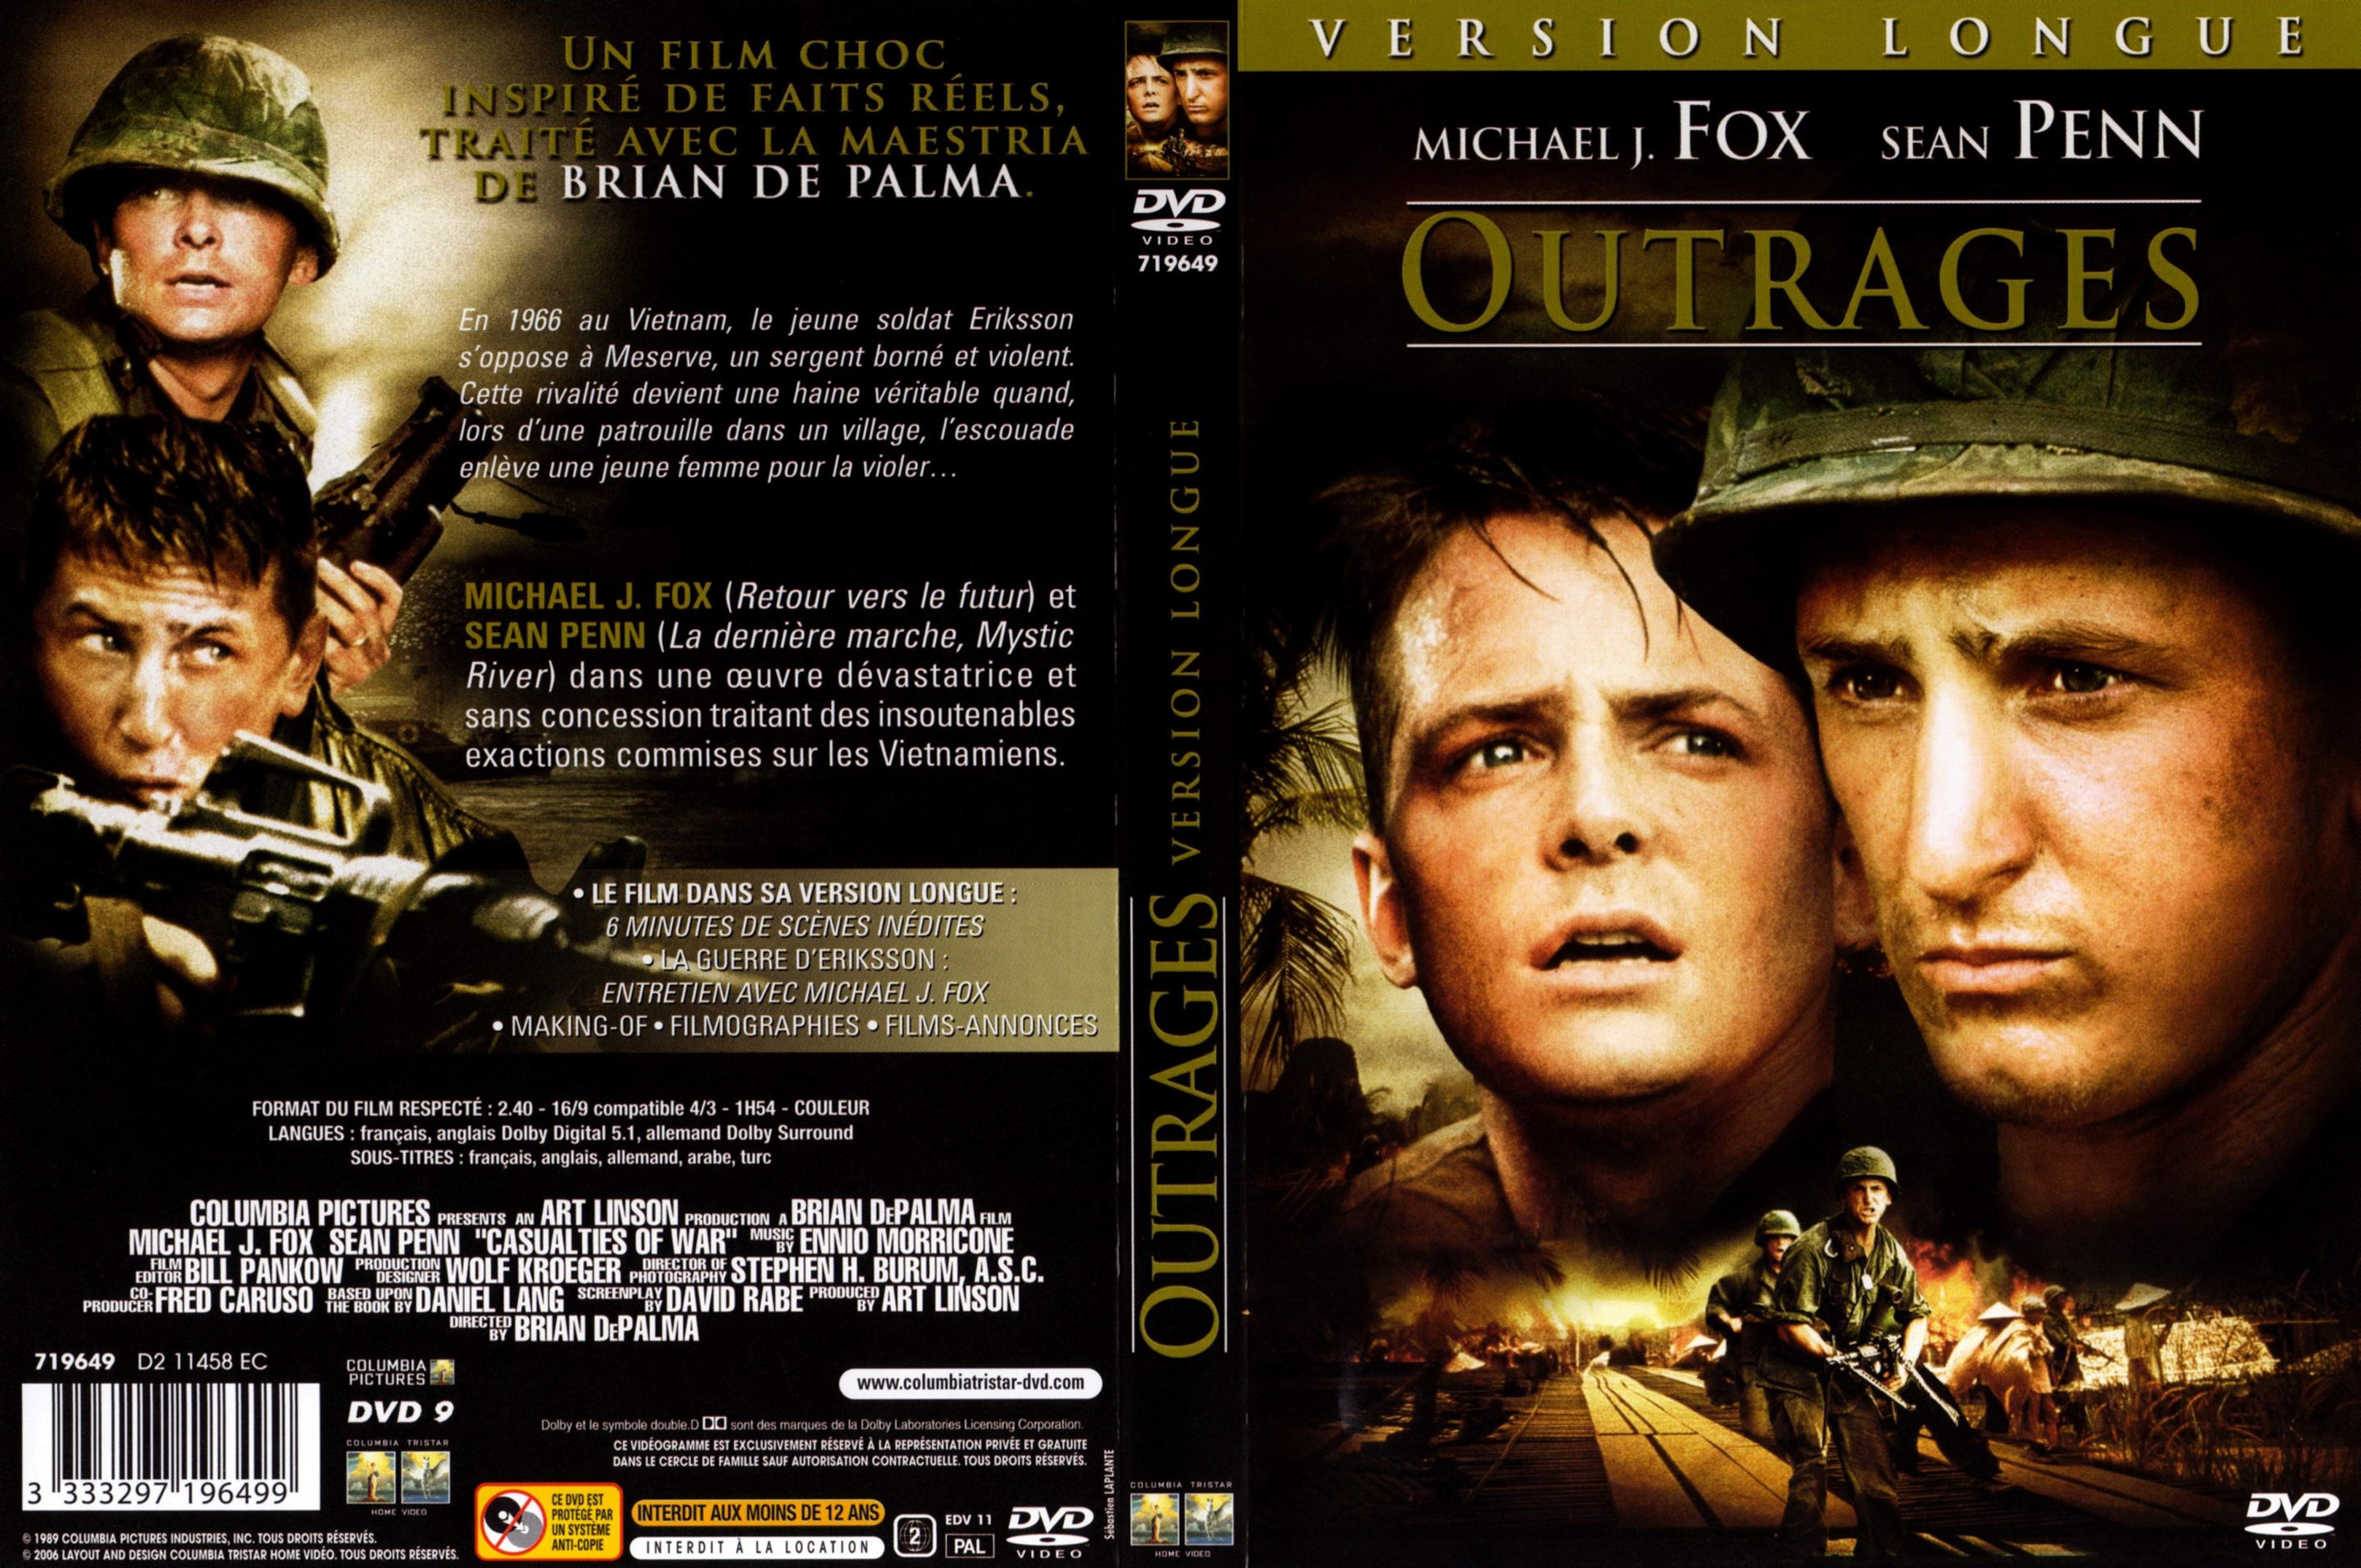 Jaquette DVD Outrages v3